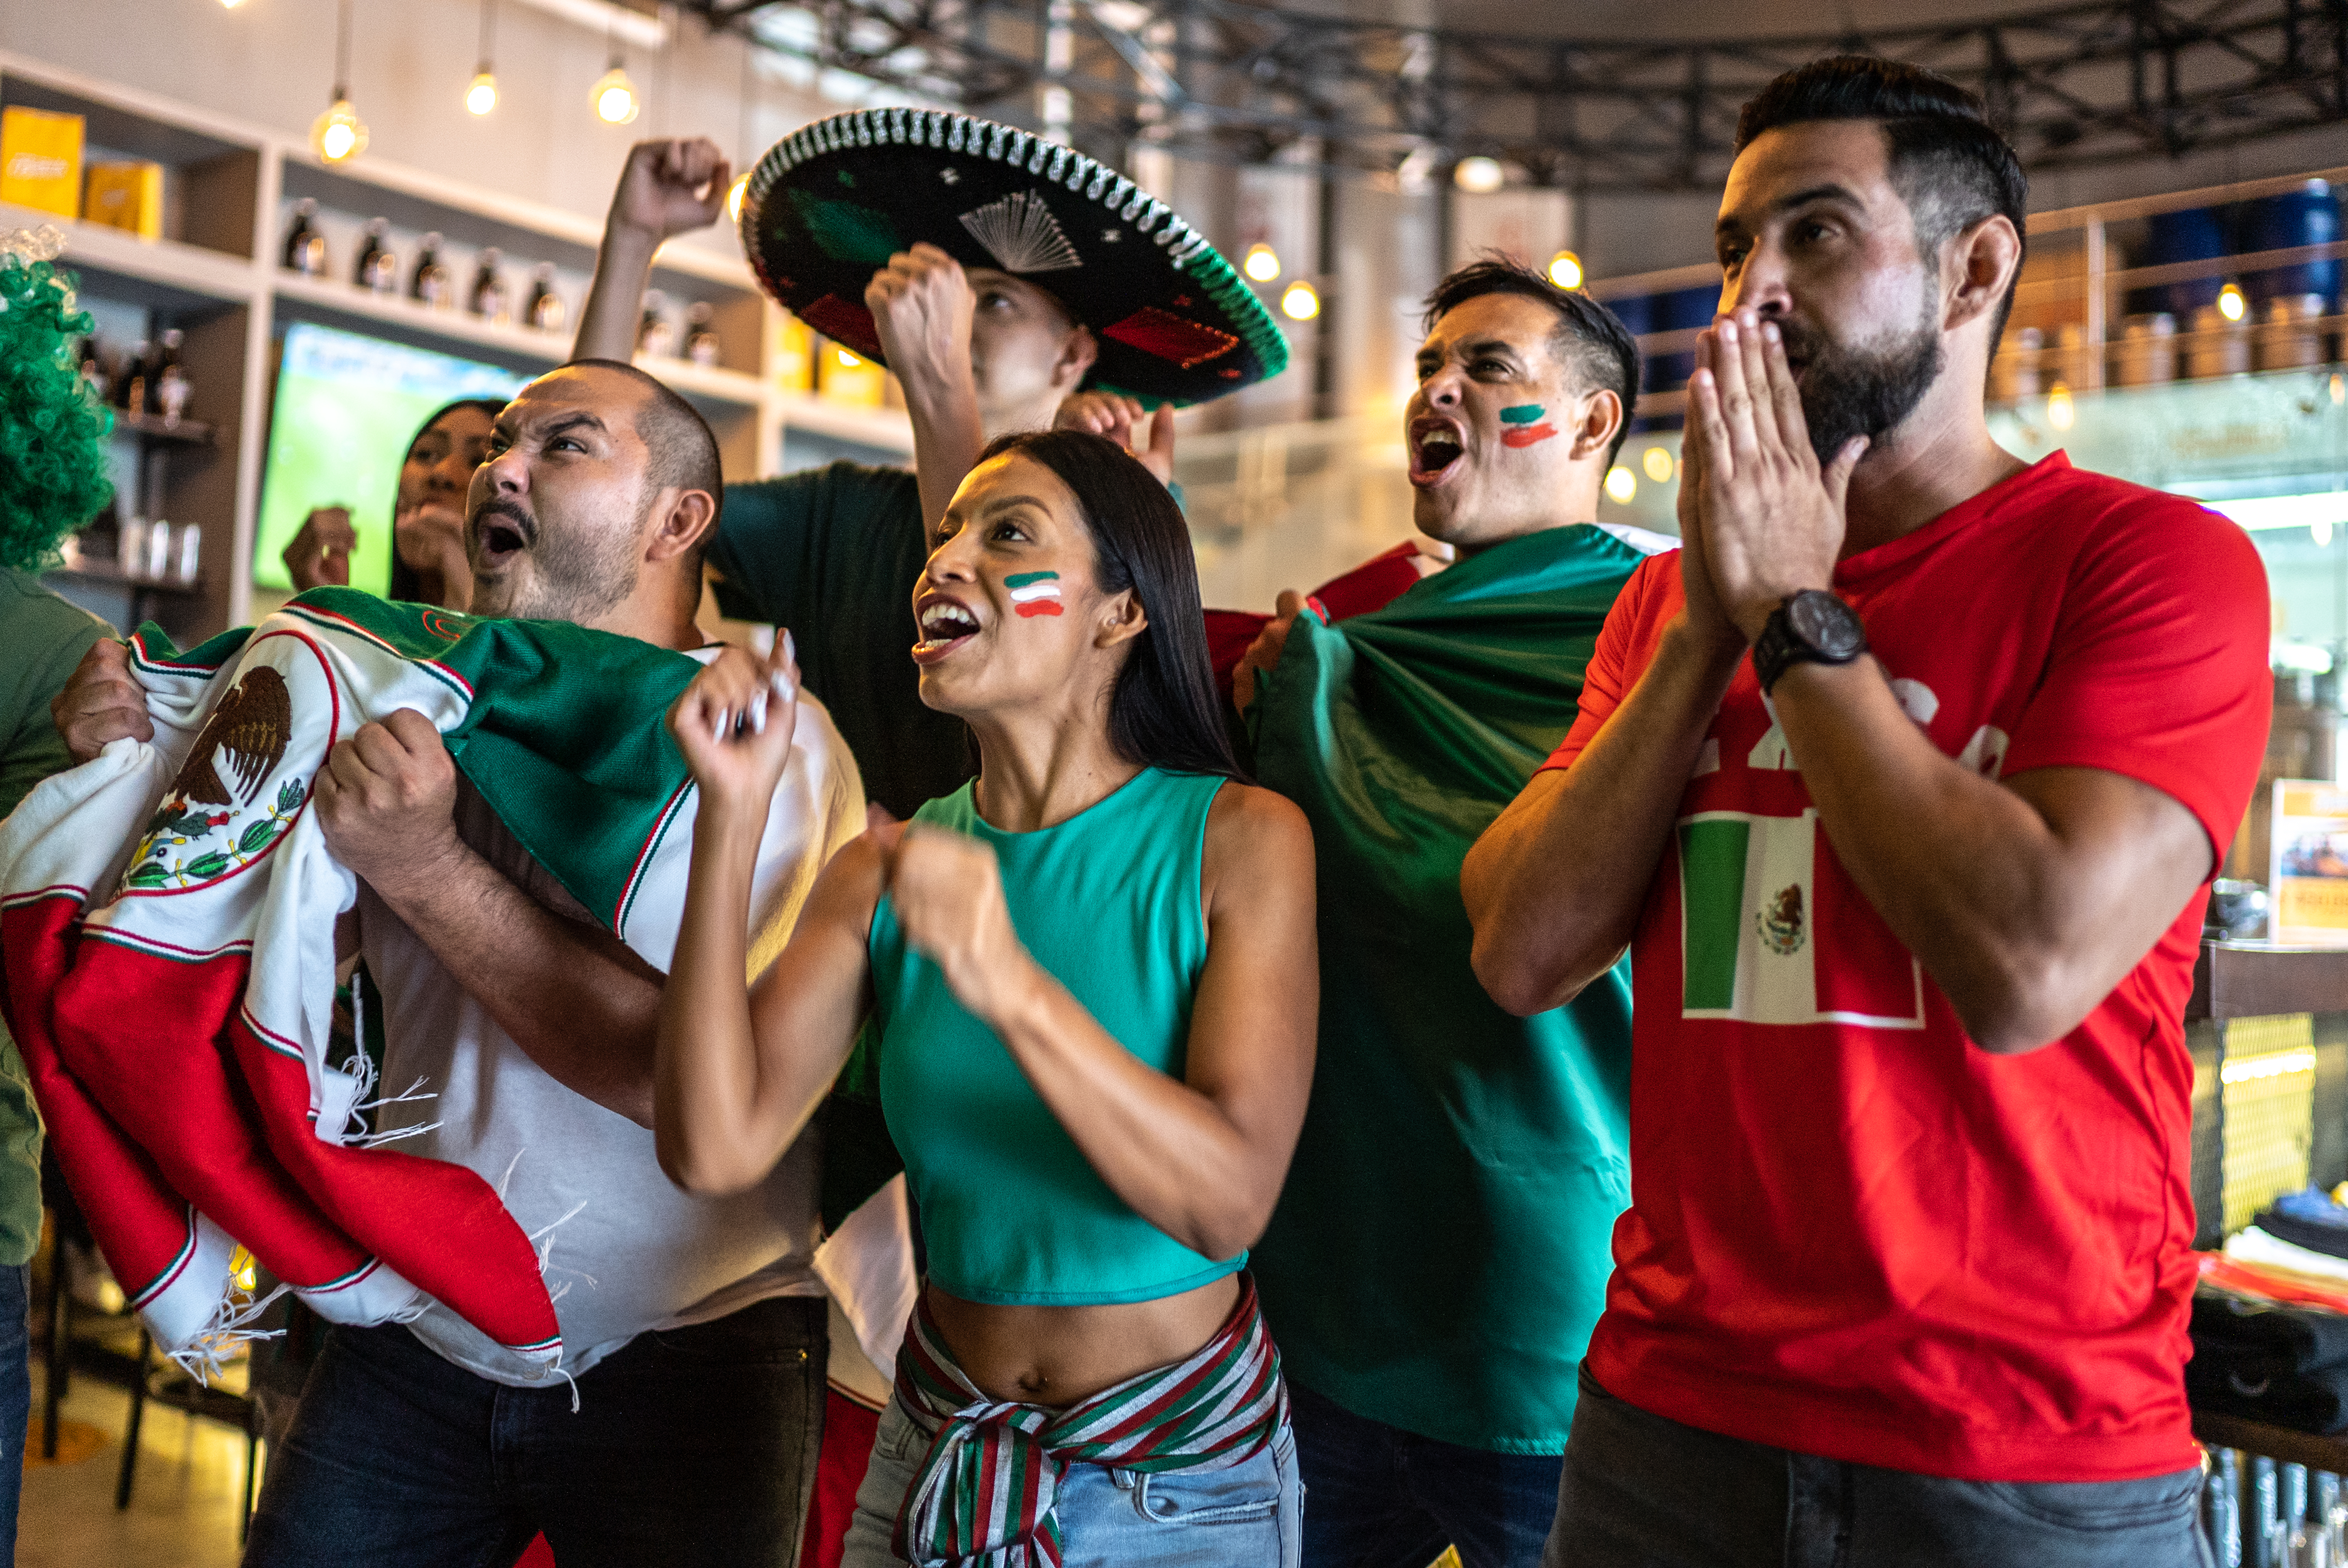 Mexicanos viendo la Copa del mundo Qatar 2022